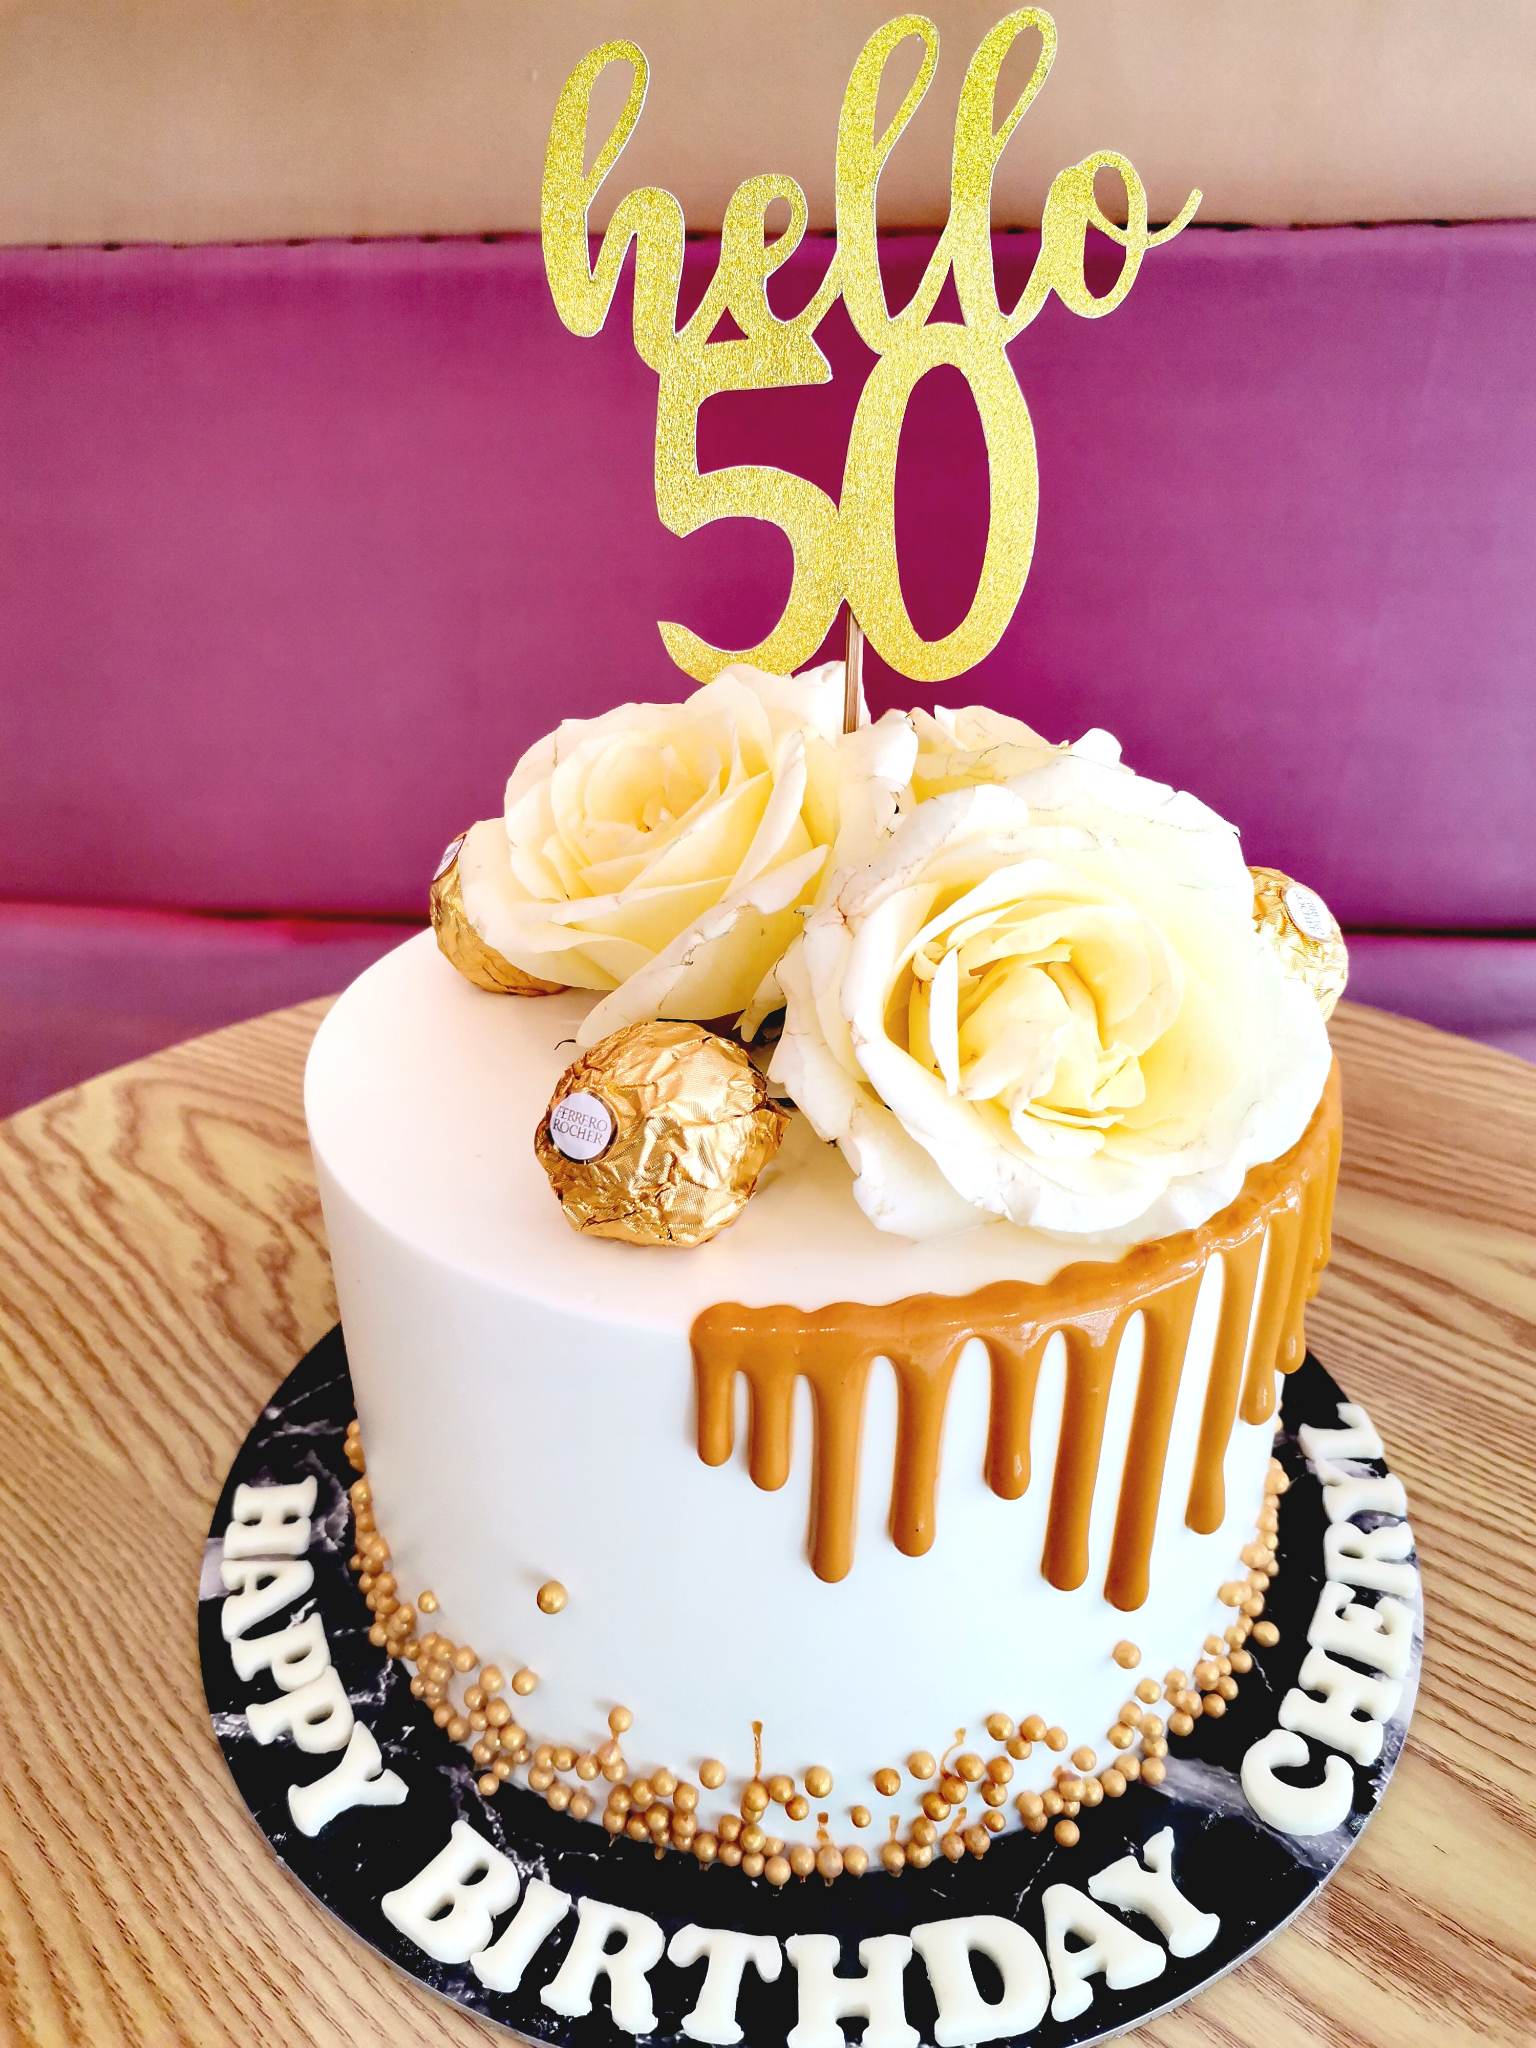 Custom Cake 7x4 Inches Happy Birthday Cheryl Pipie Co Bread Cake Pastries Iligan 